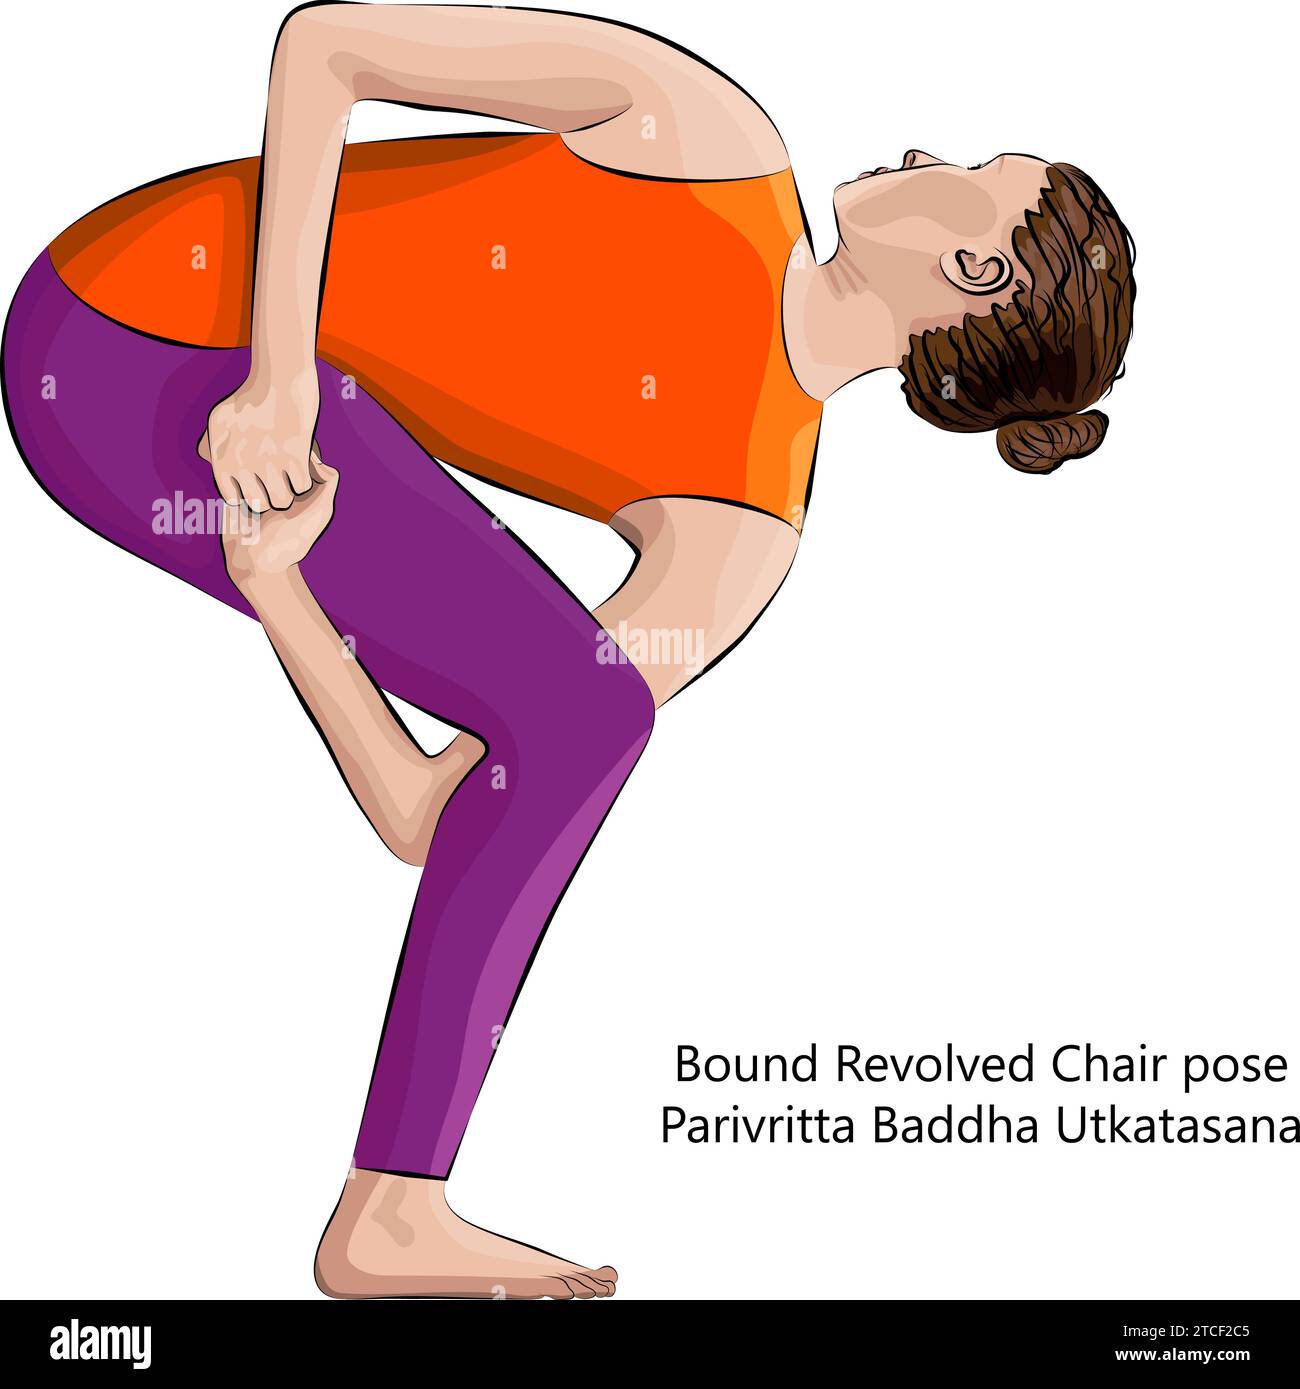 Compass Chair Pose (Eka Pada Parivrtta Utkatasana Surya Yantrasana Variation)  by Bernadette C. - Exercise How-to - Skimble